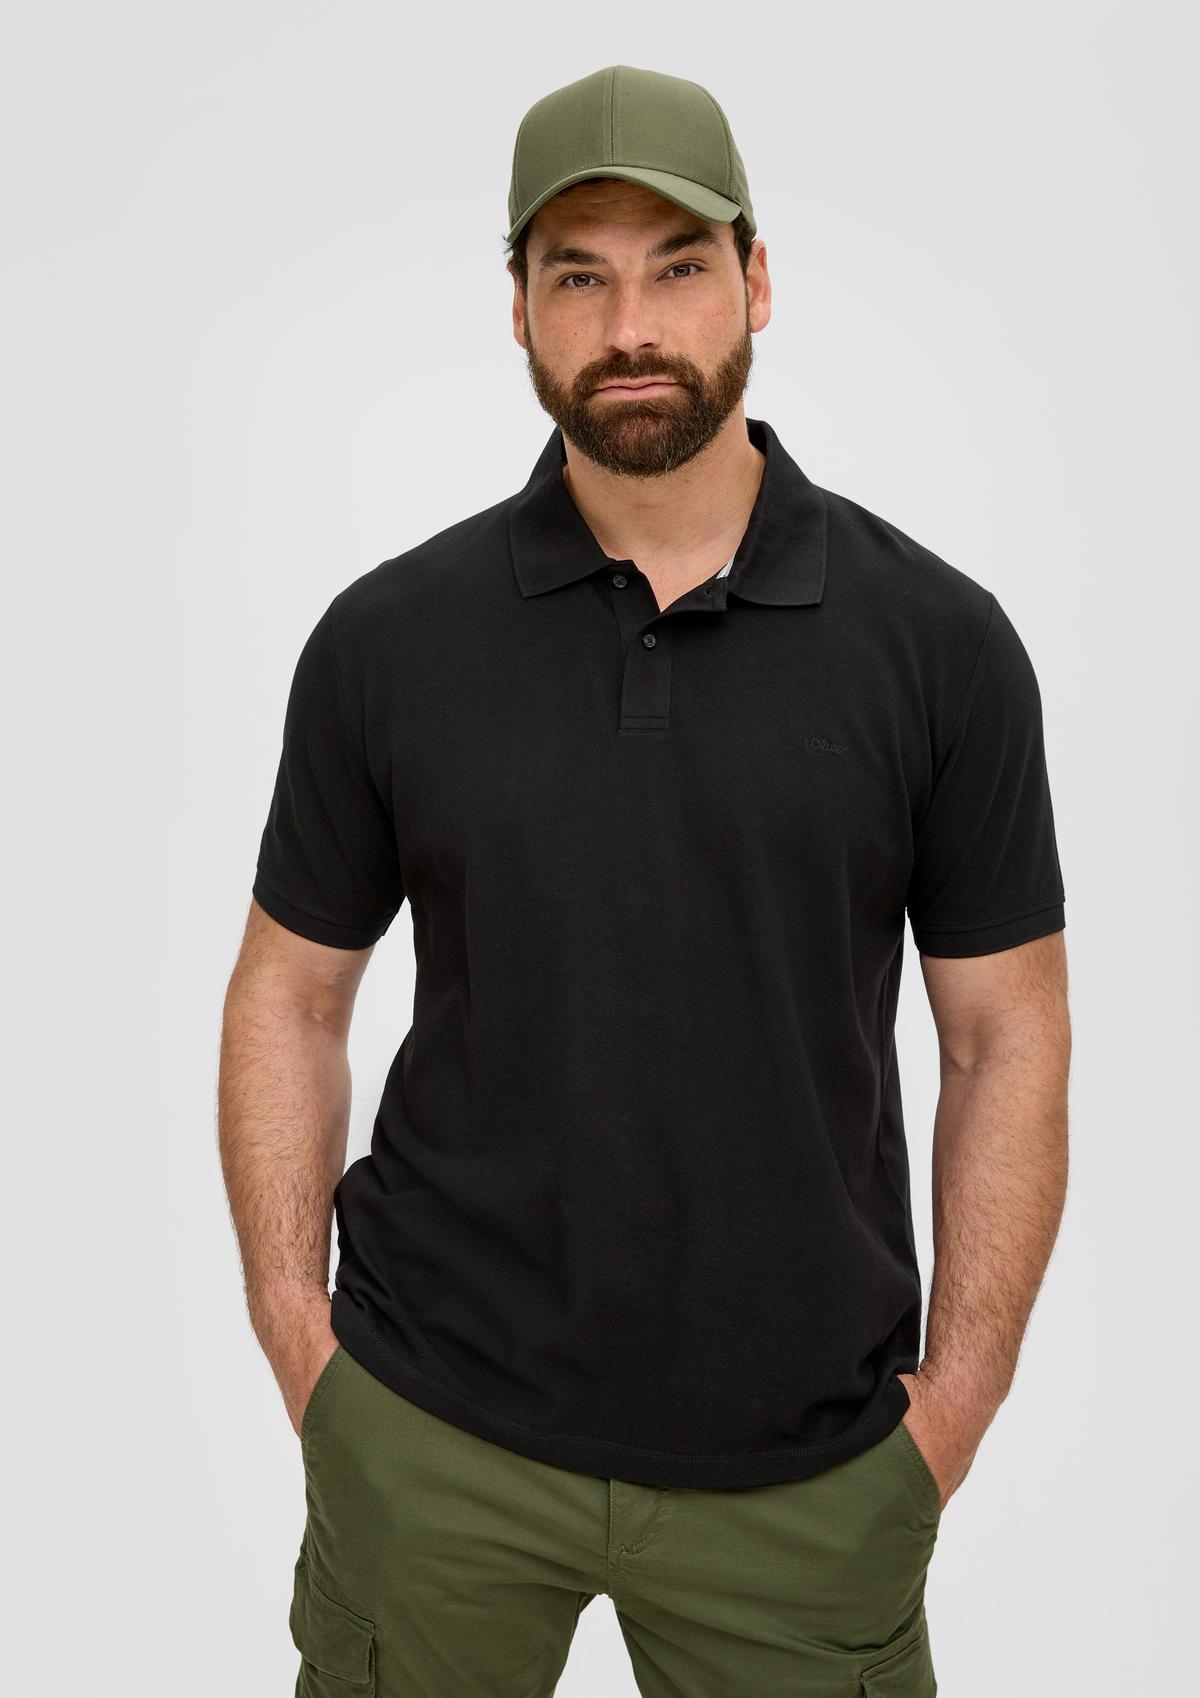 Polo shirt minimalist - with a print navy